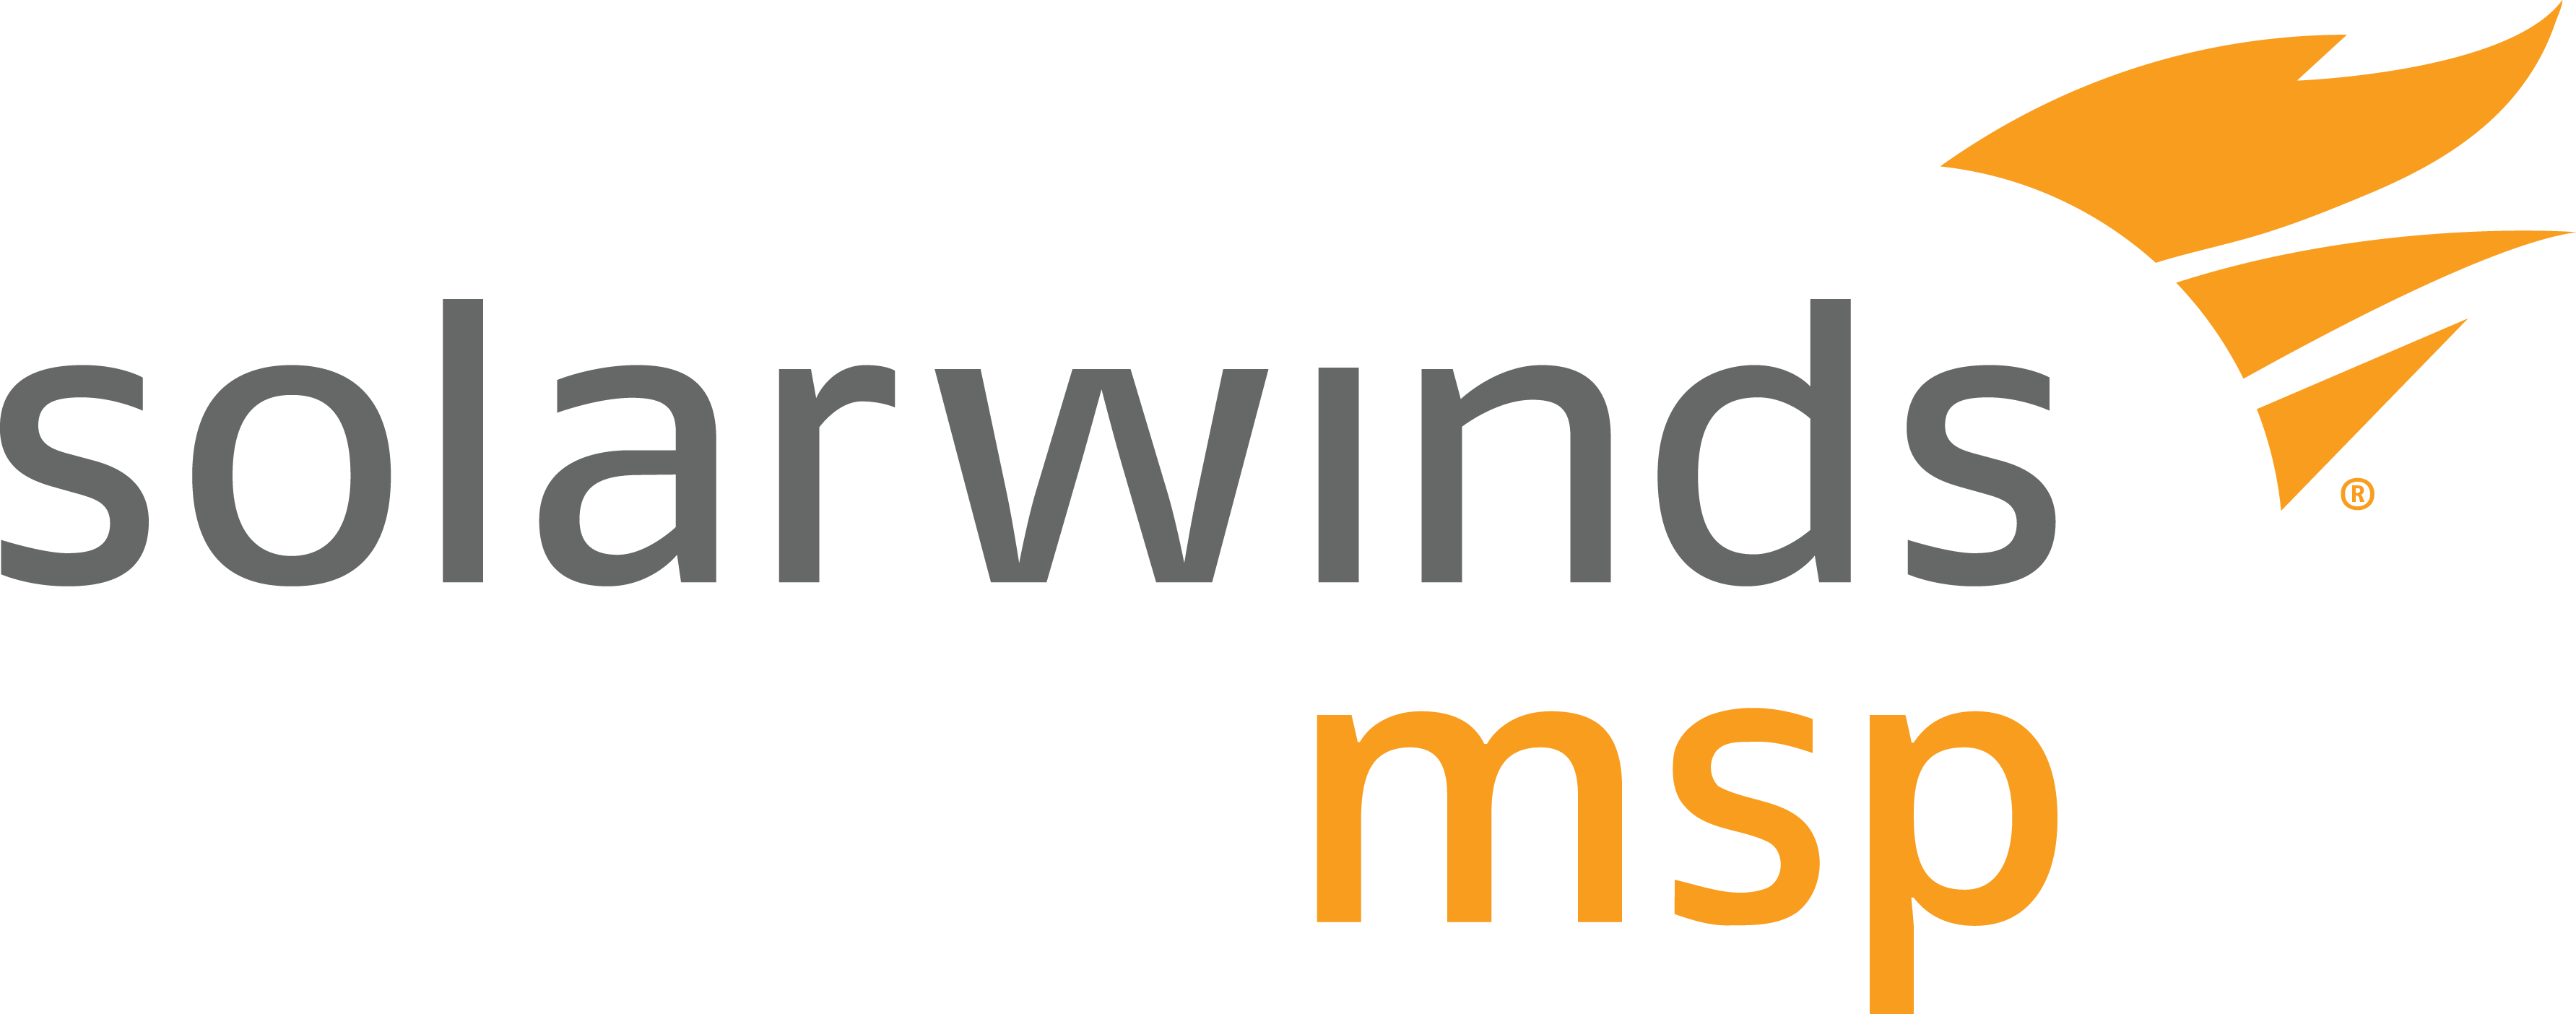 SolarWinds MSP Logo Full Colour